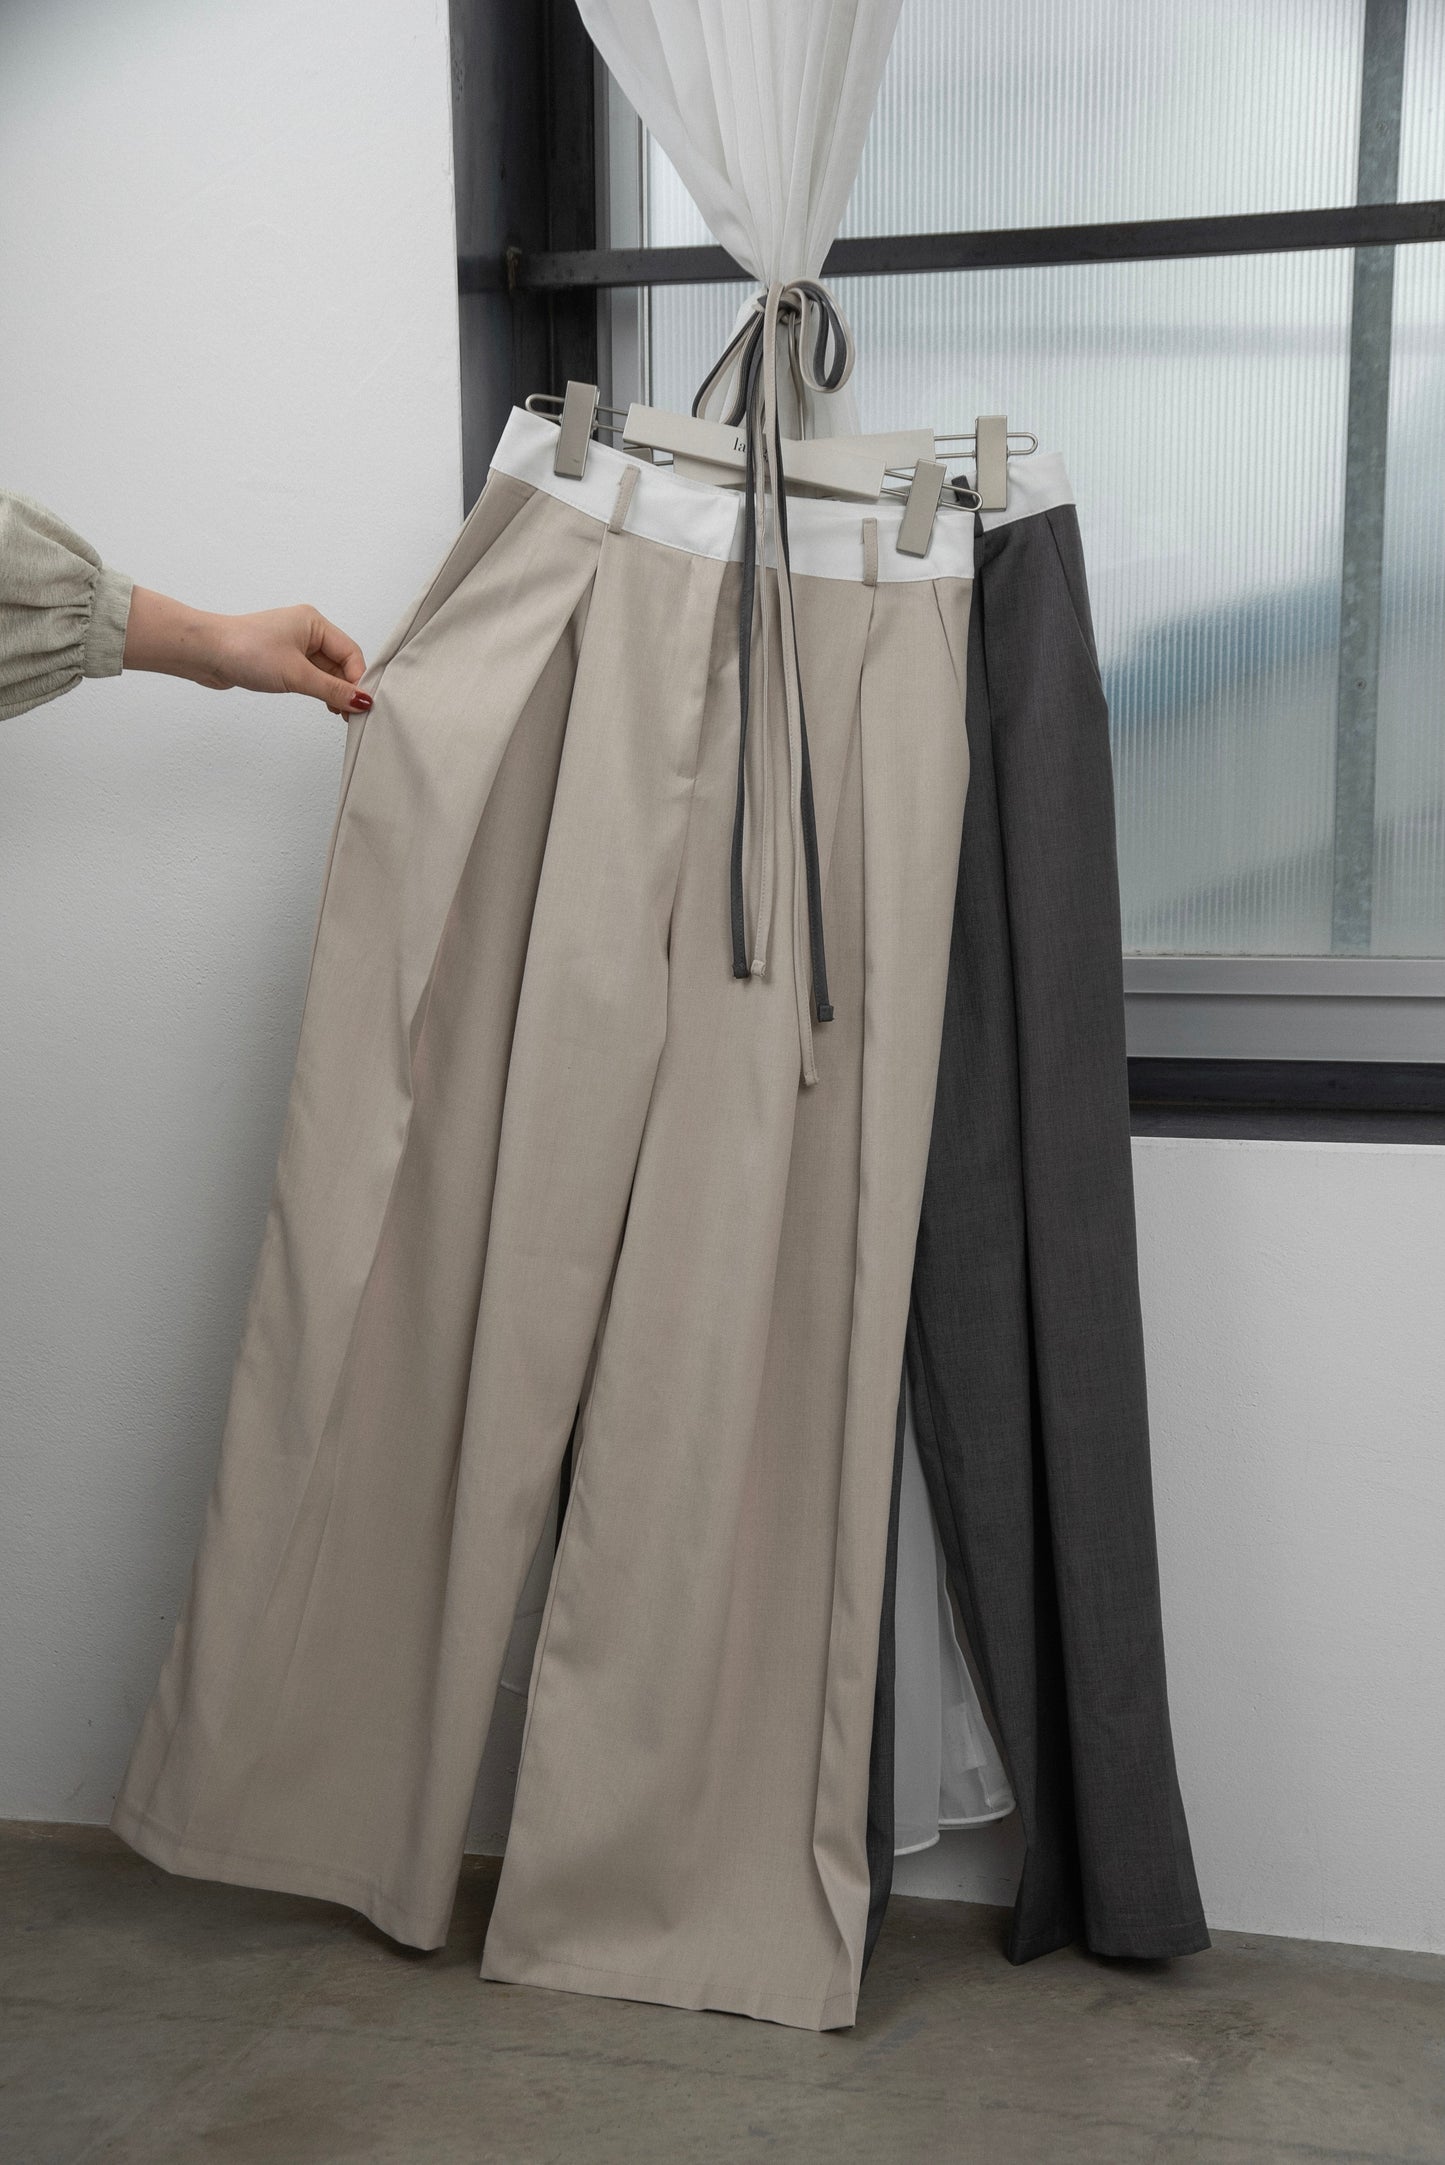 thin string waist bicolor pants